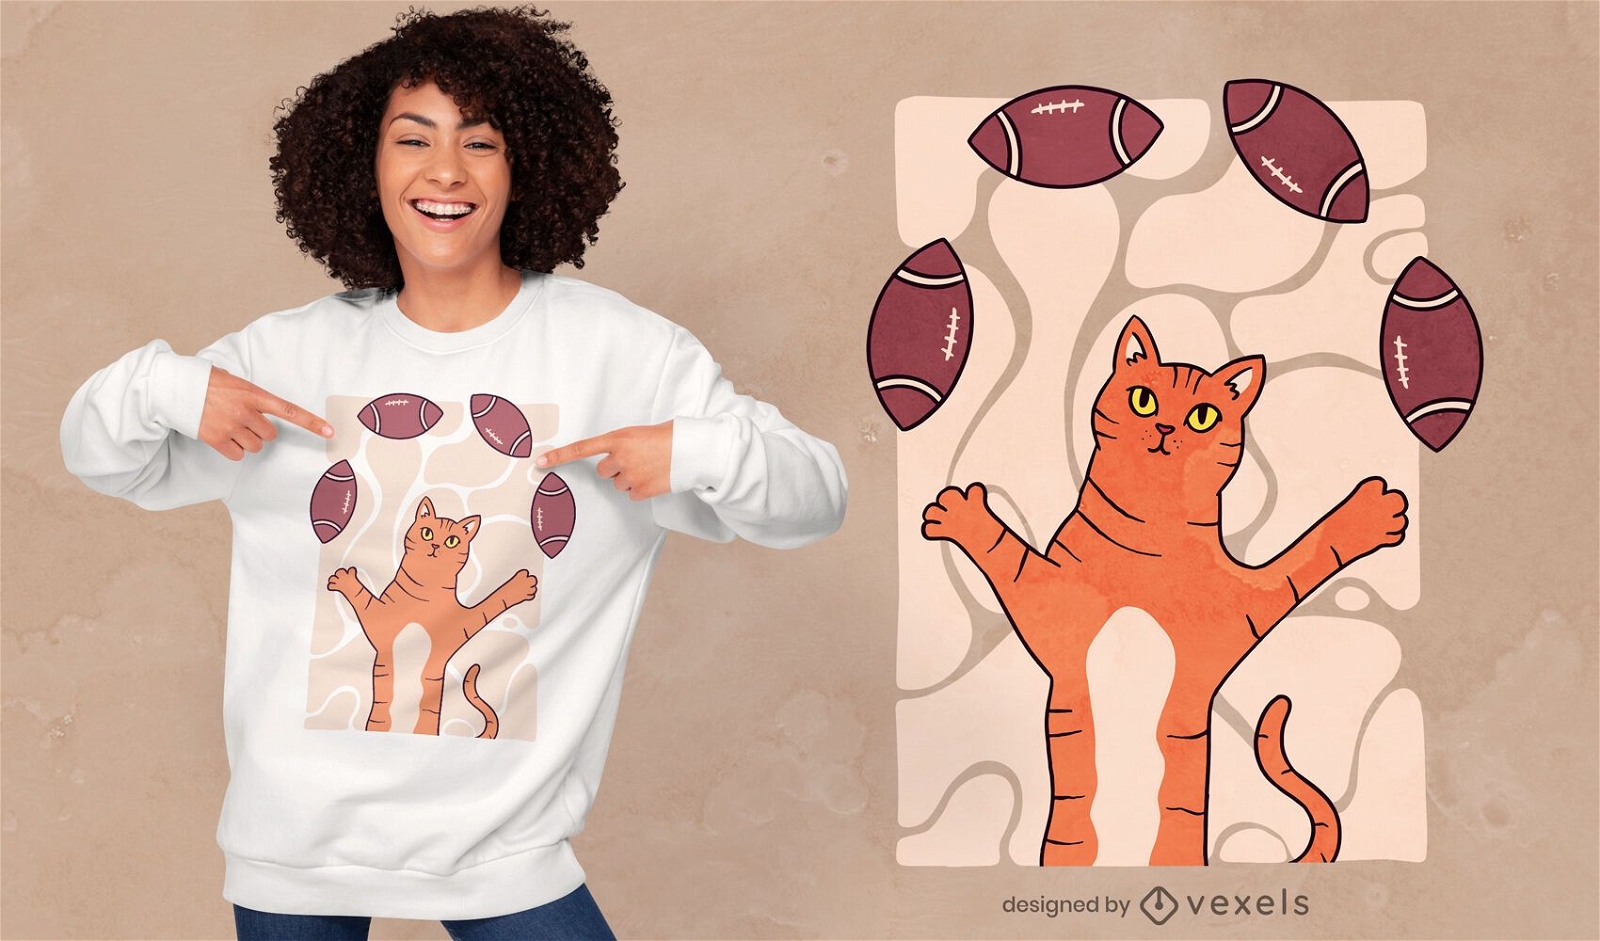 Juggling cat t-shirt design